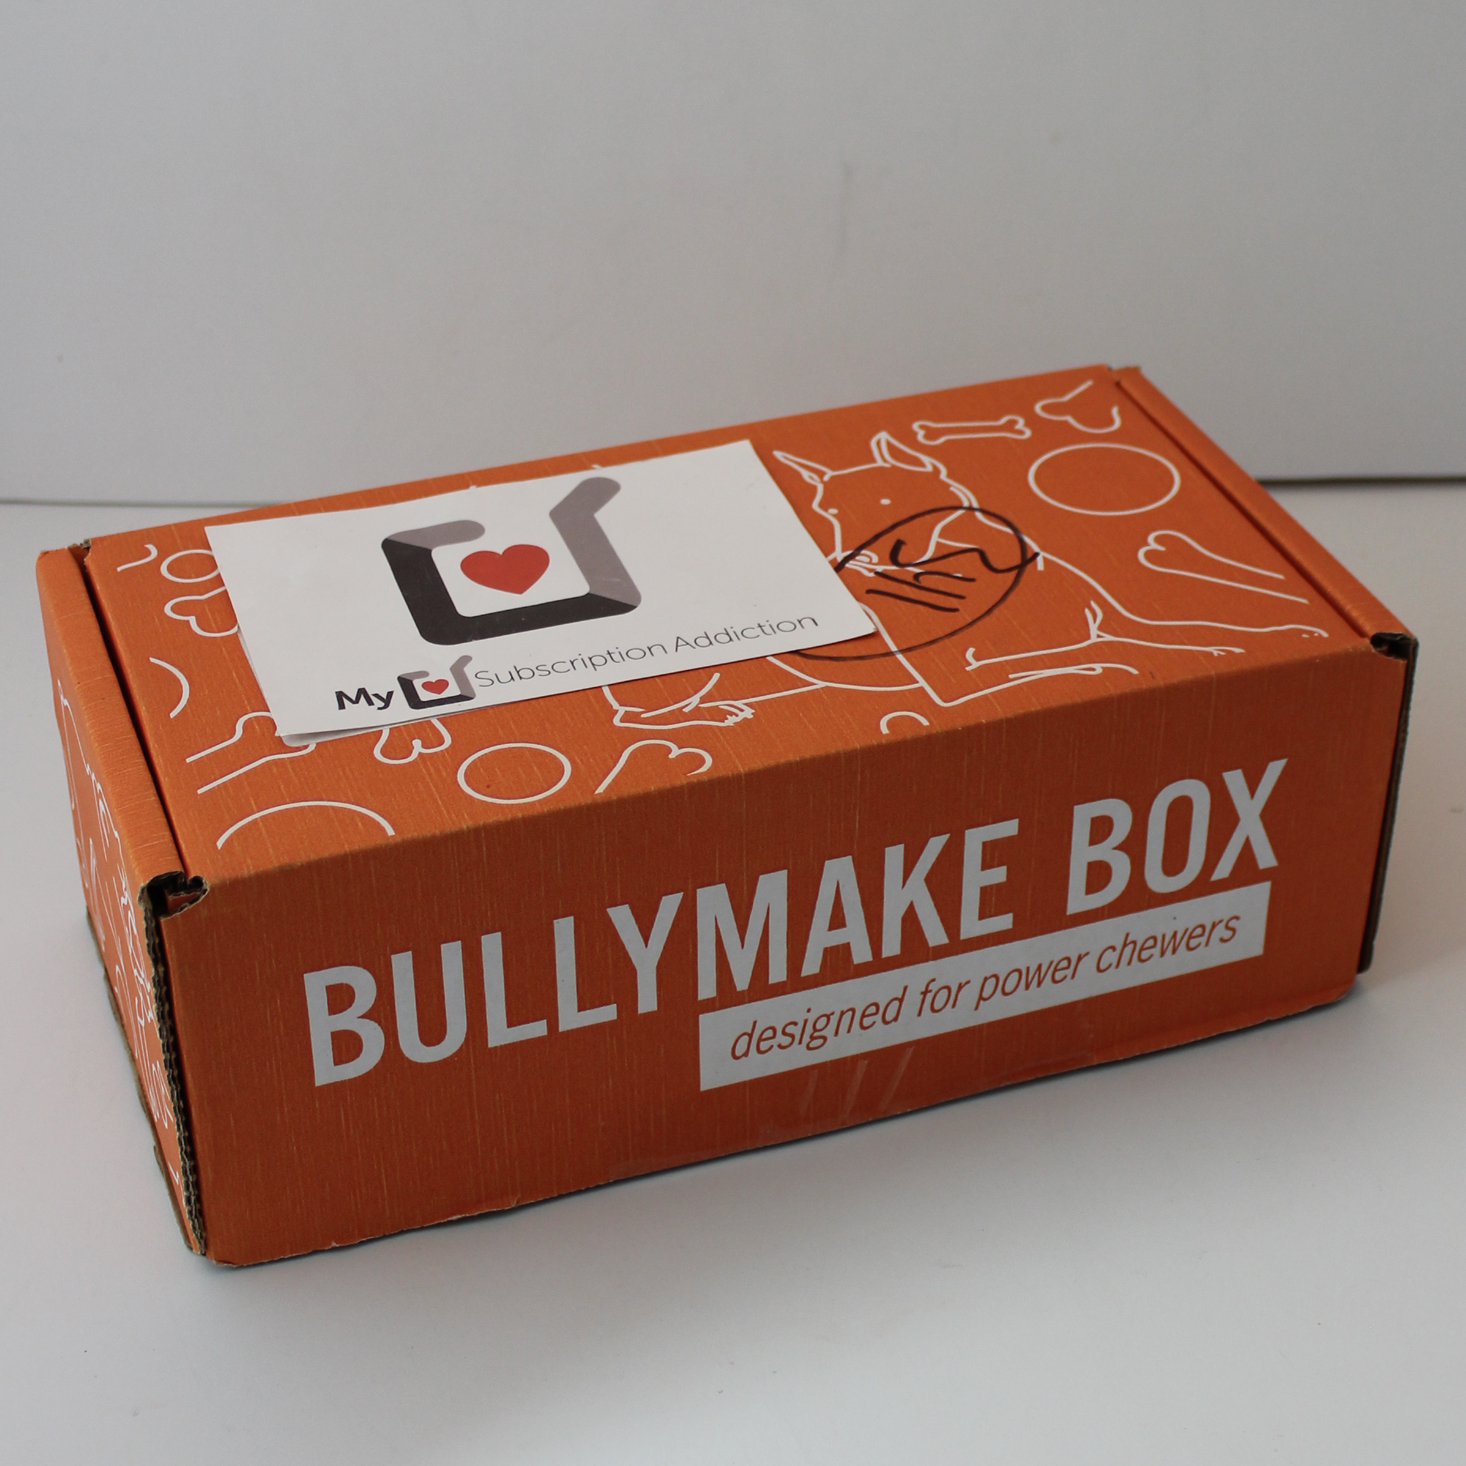 Bullymake Box November 2019 Box